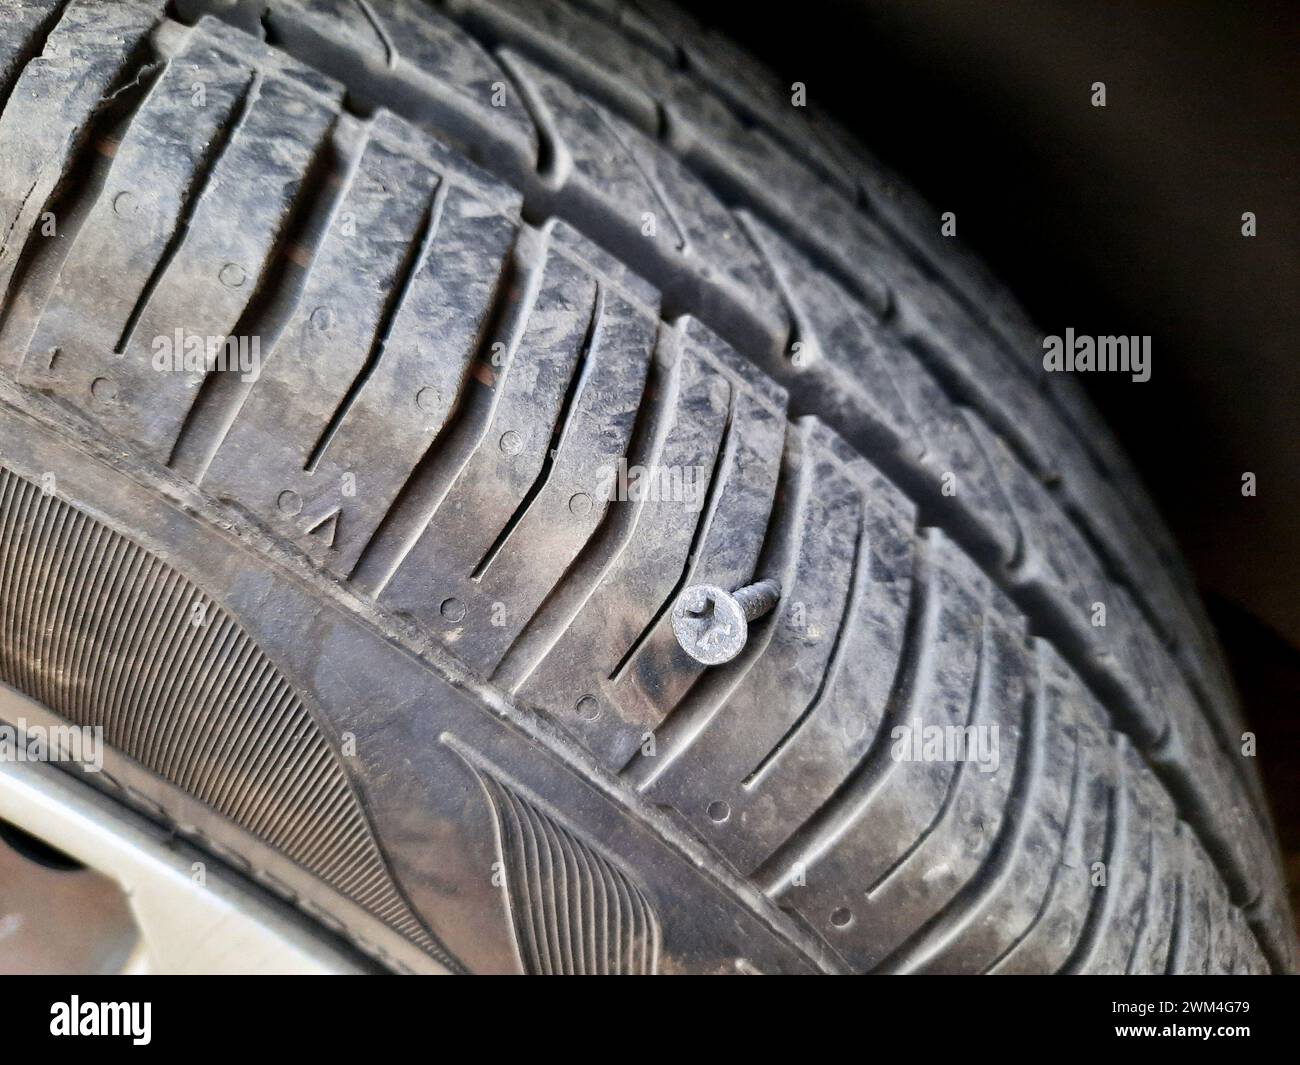 Tires on 26 vehicles slashed outside south Edmonton apartment | CBC News